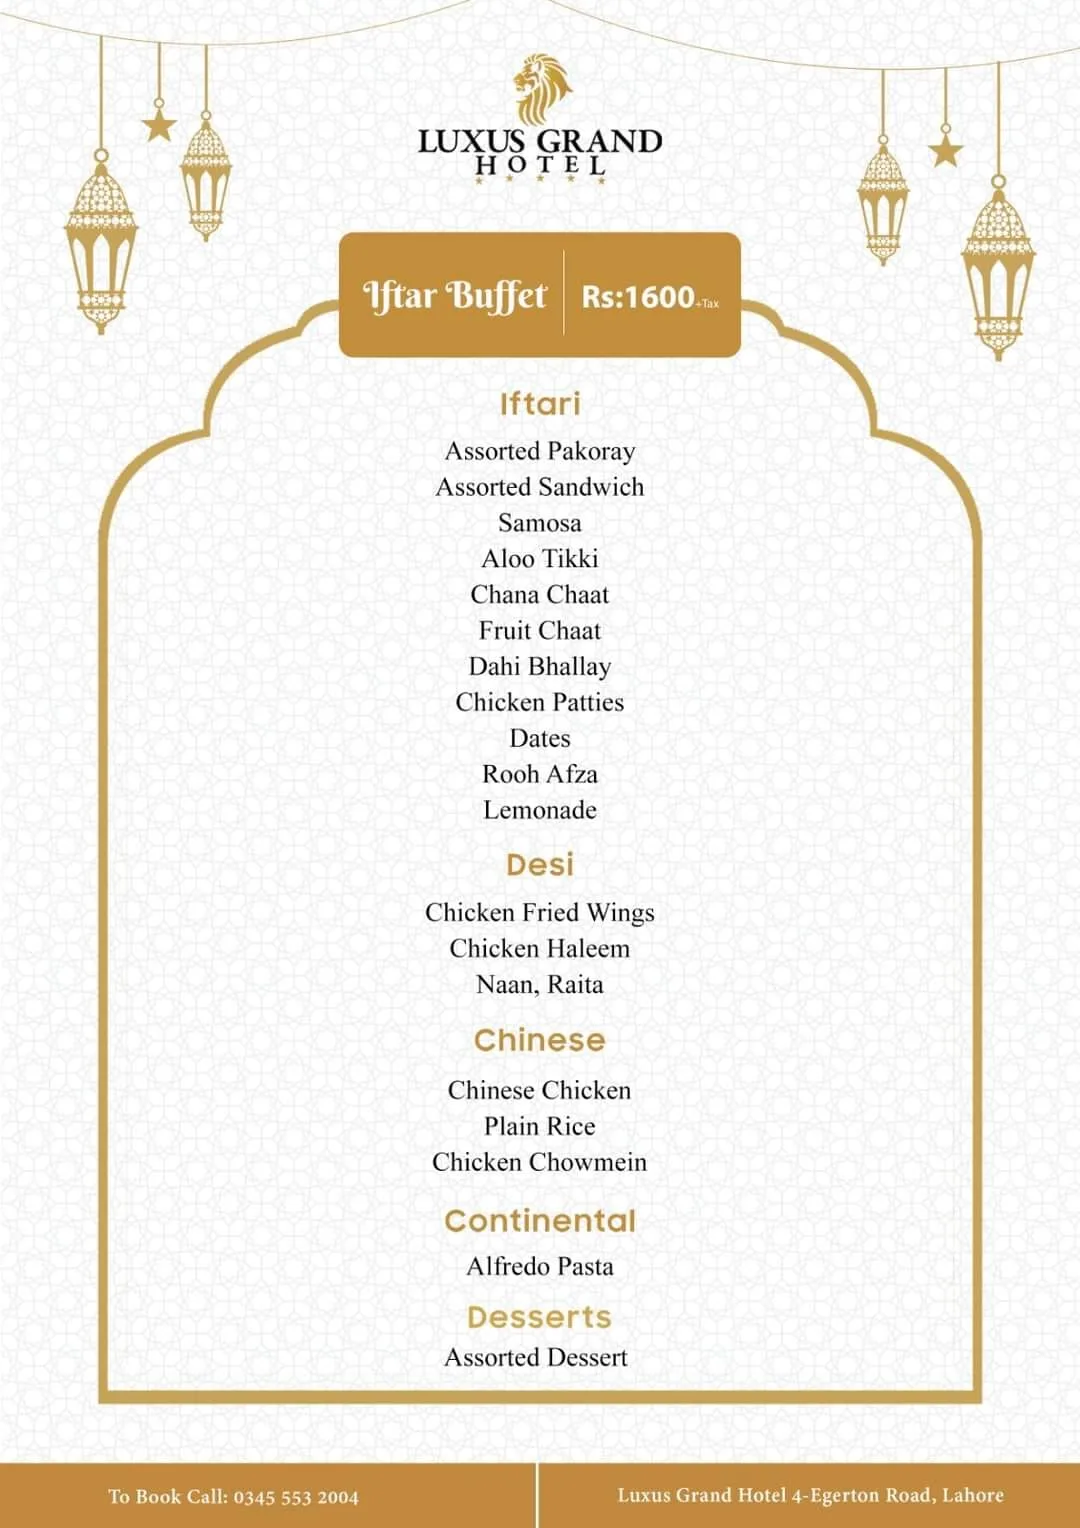 Luxud Grand Iftari buffet